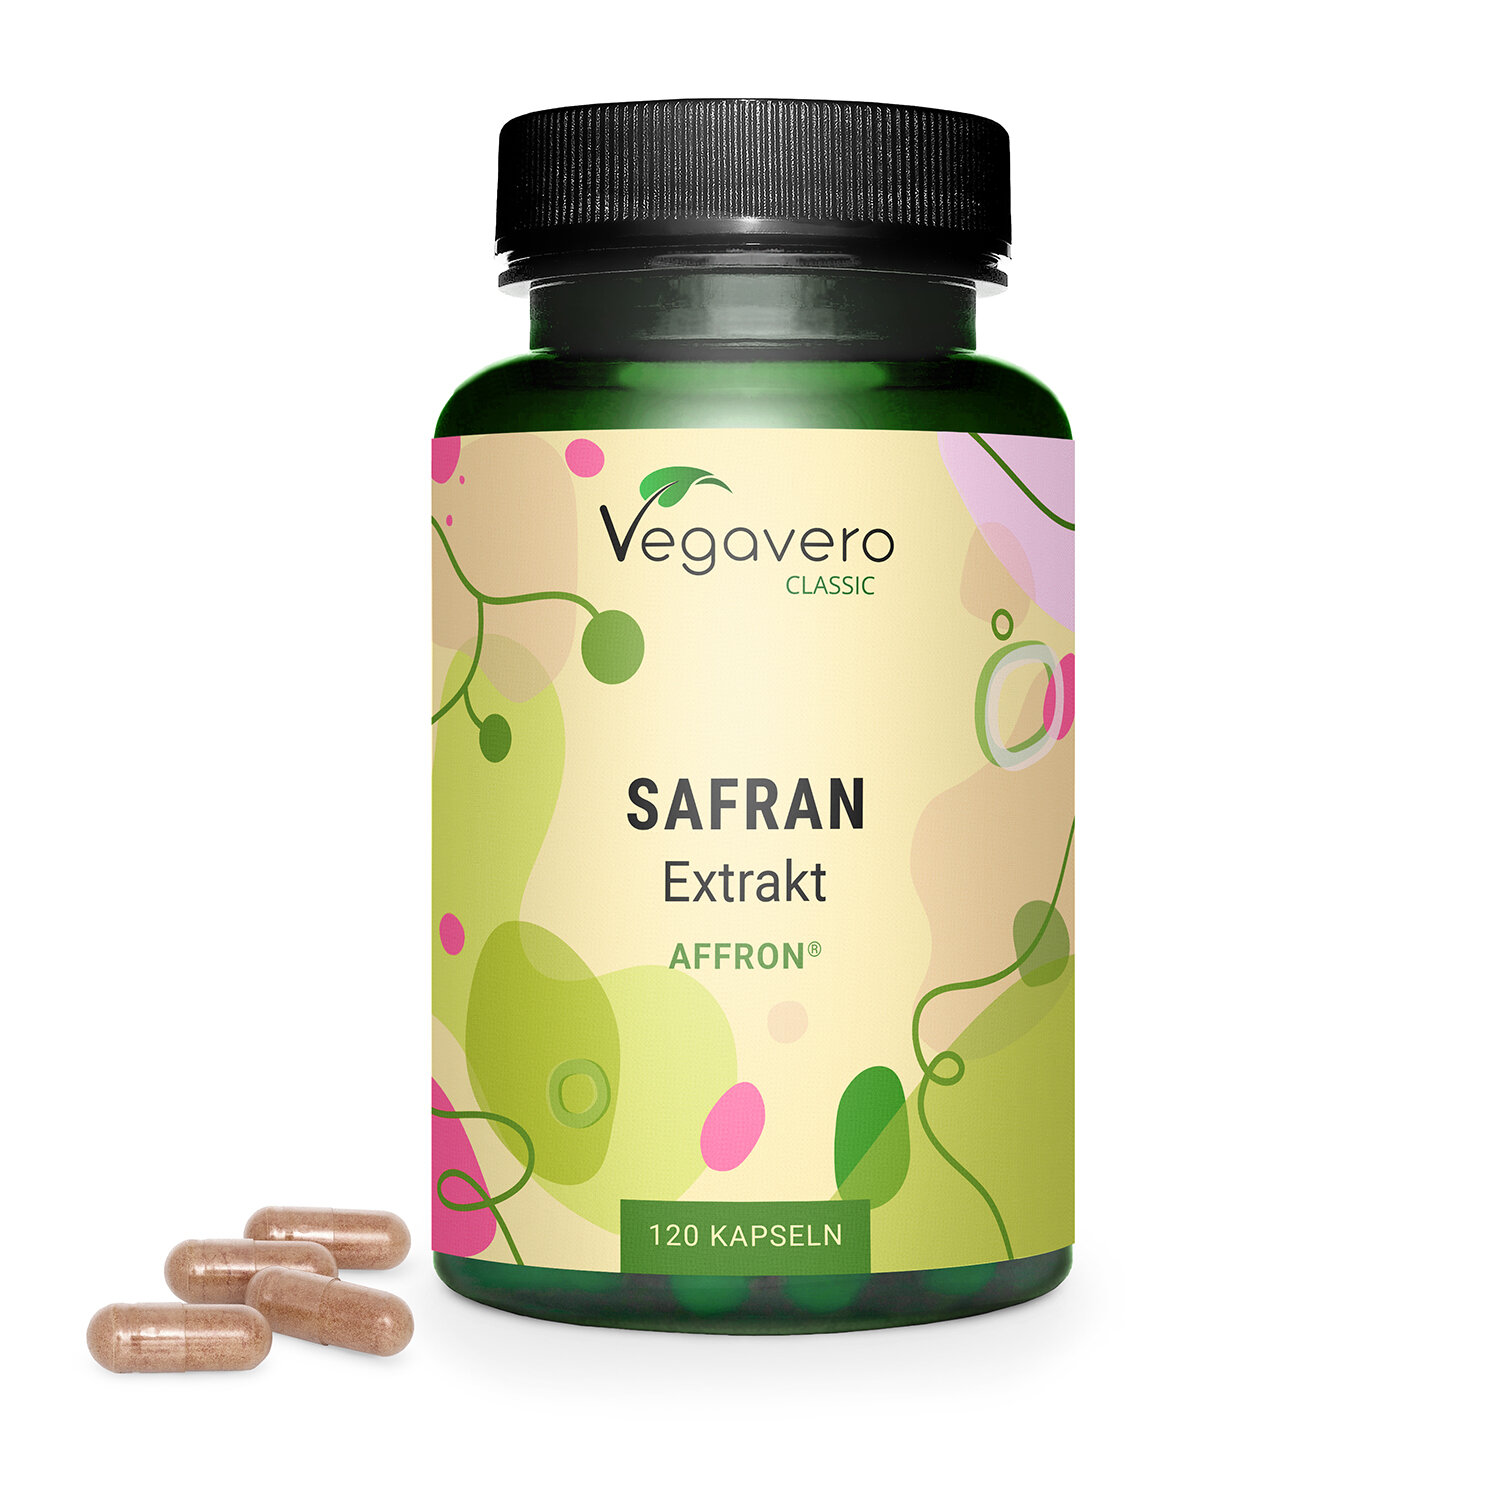 Vegavero Safran Extrakt | 120 Kapseln | echter Safran aus Spanien | vegan